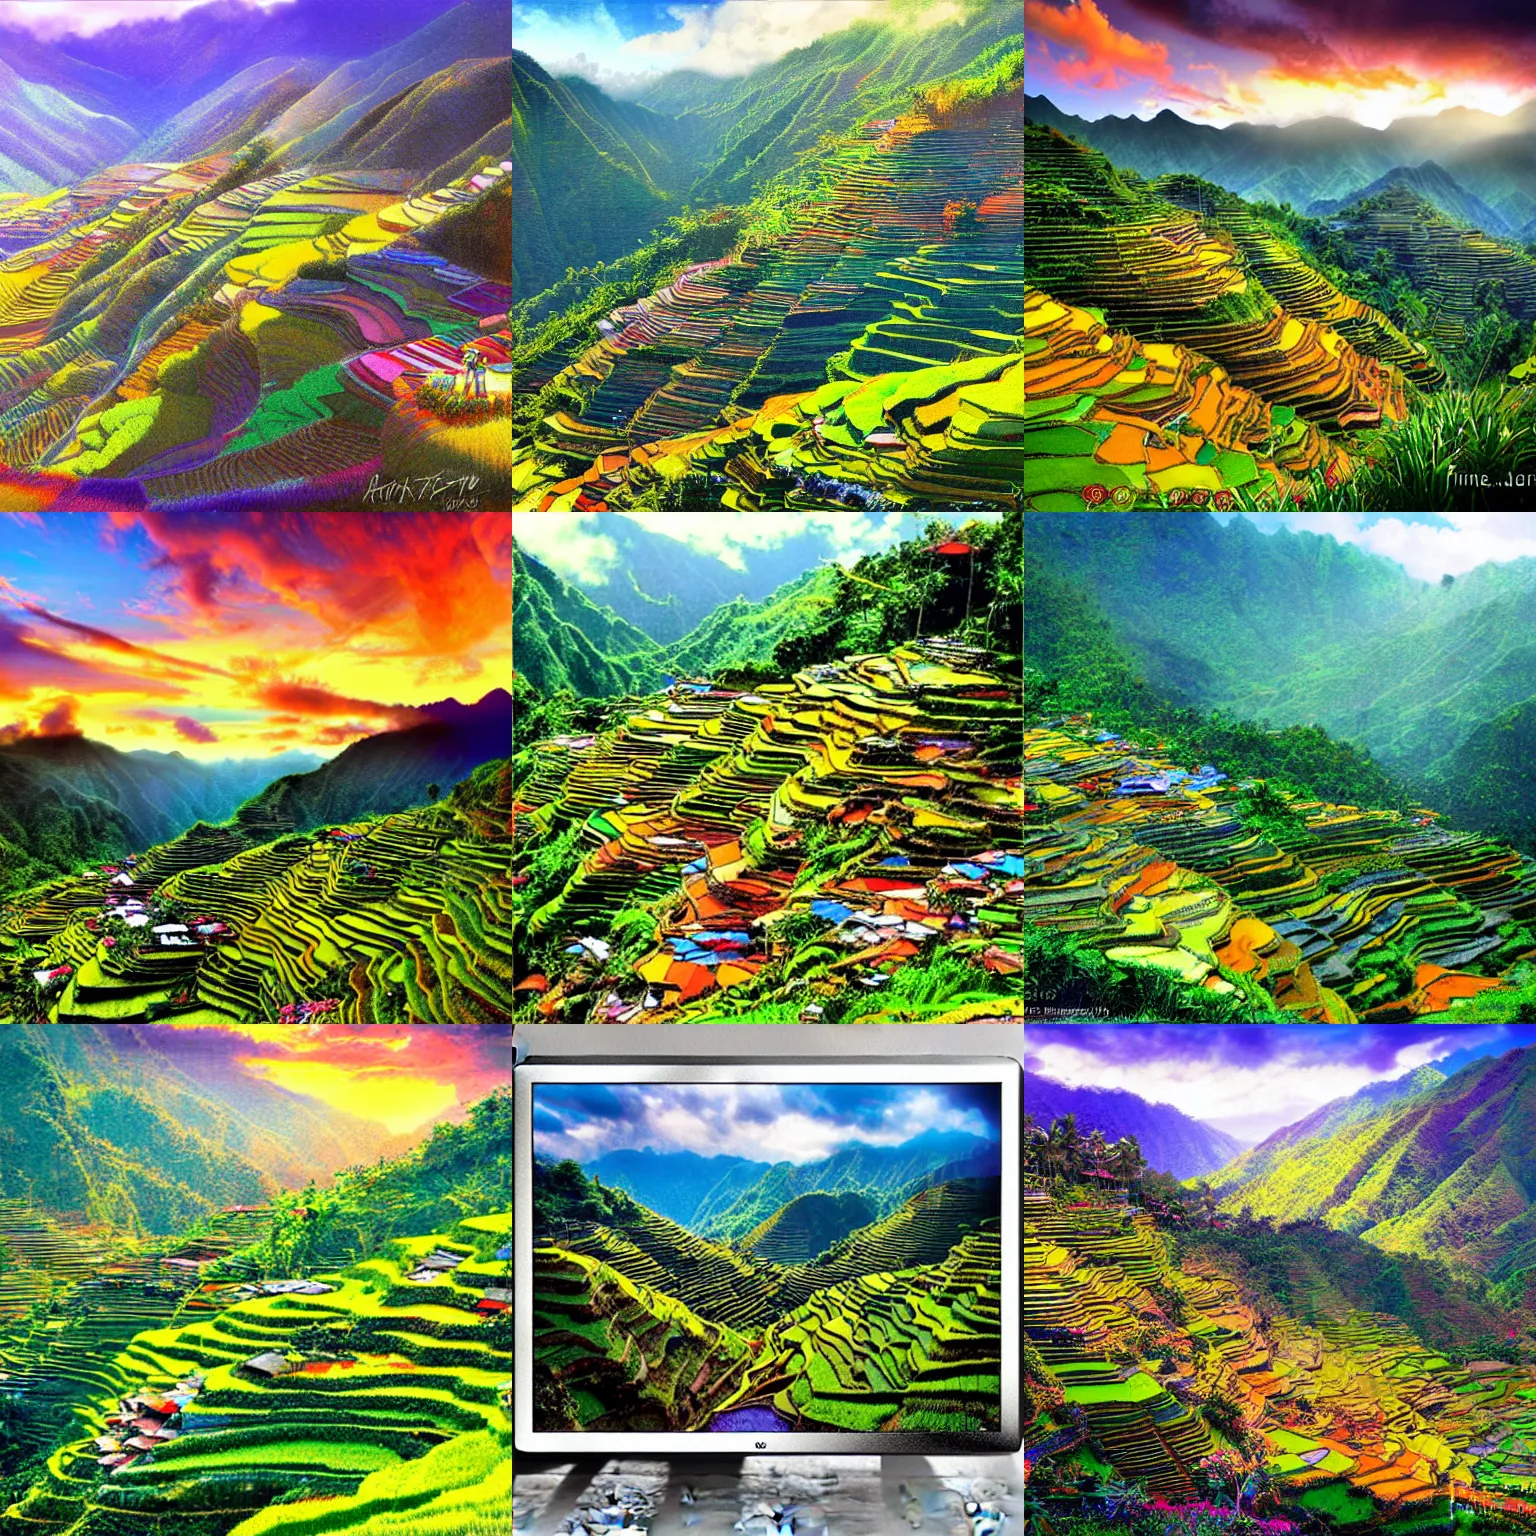 Prompt: banaue rice terraces, philippines, colorful, digital art, concept art, t. kinkade, g. rutkowski